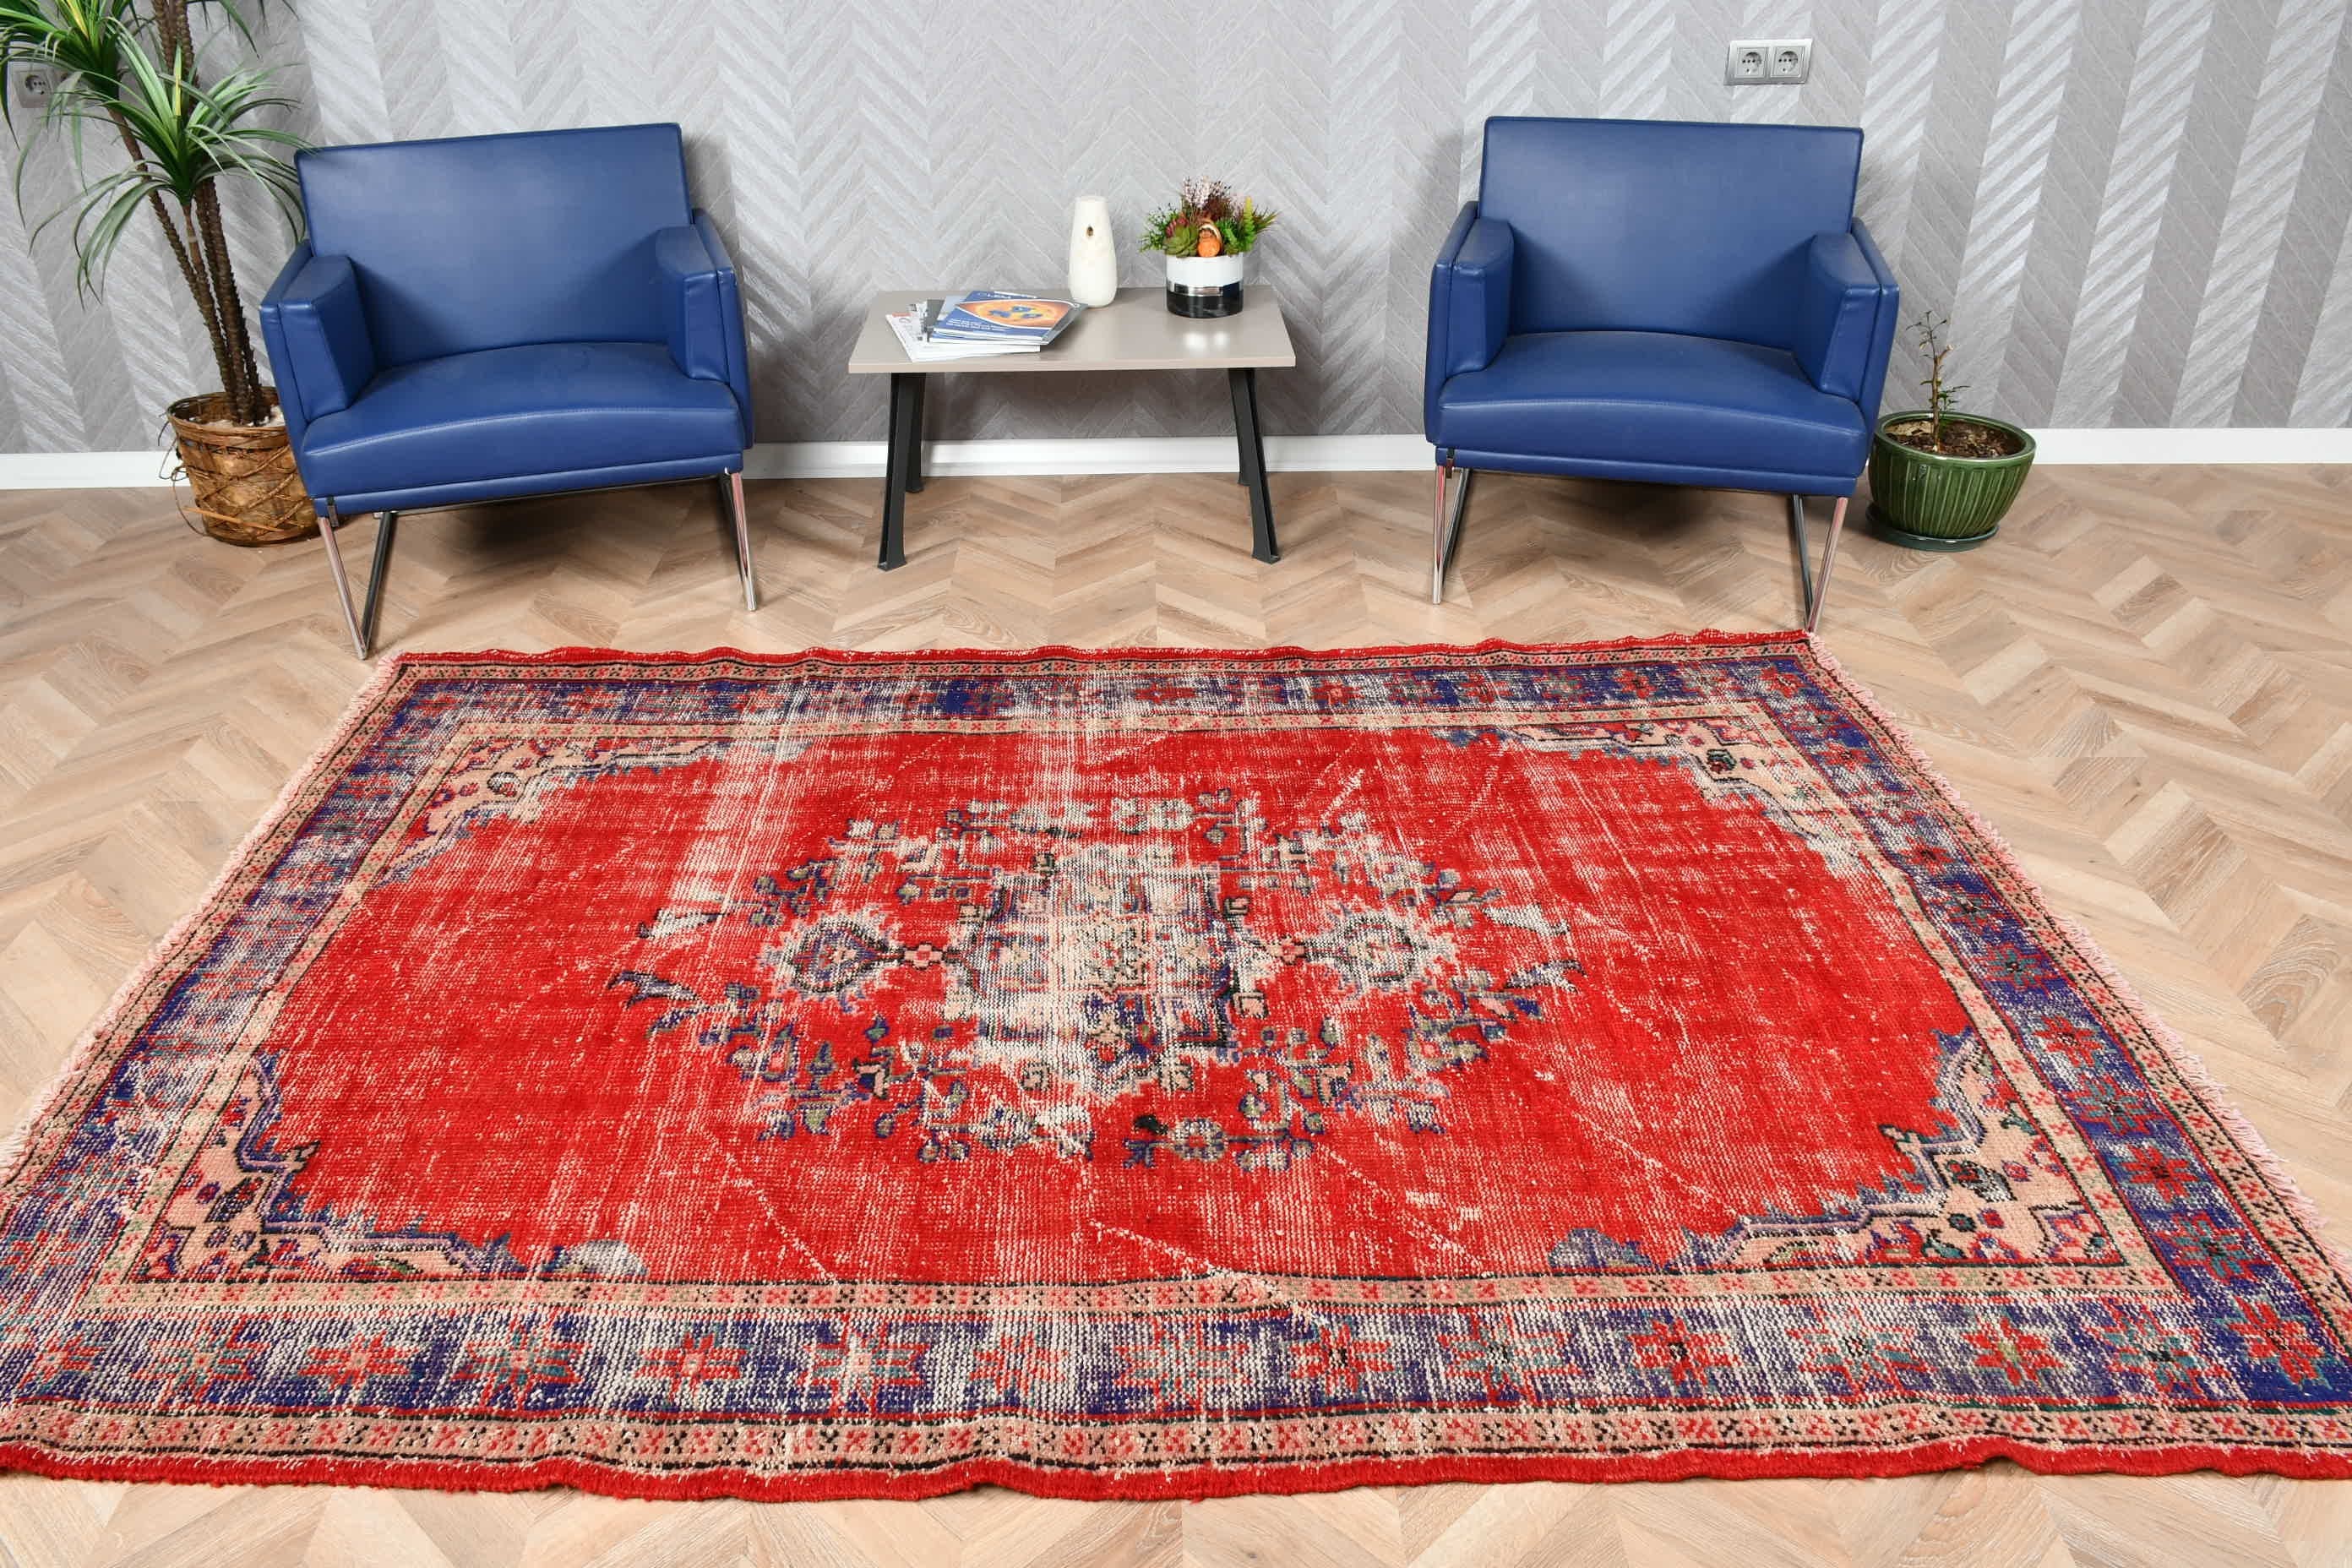 Turkey Rug, Wool Rug, Red Anatolian Rugs, Turkish Rugs, Living Room Rugs, Vintage Rug, Bedroom Rug, 5.8x8.1 ft Large Rug